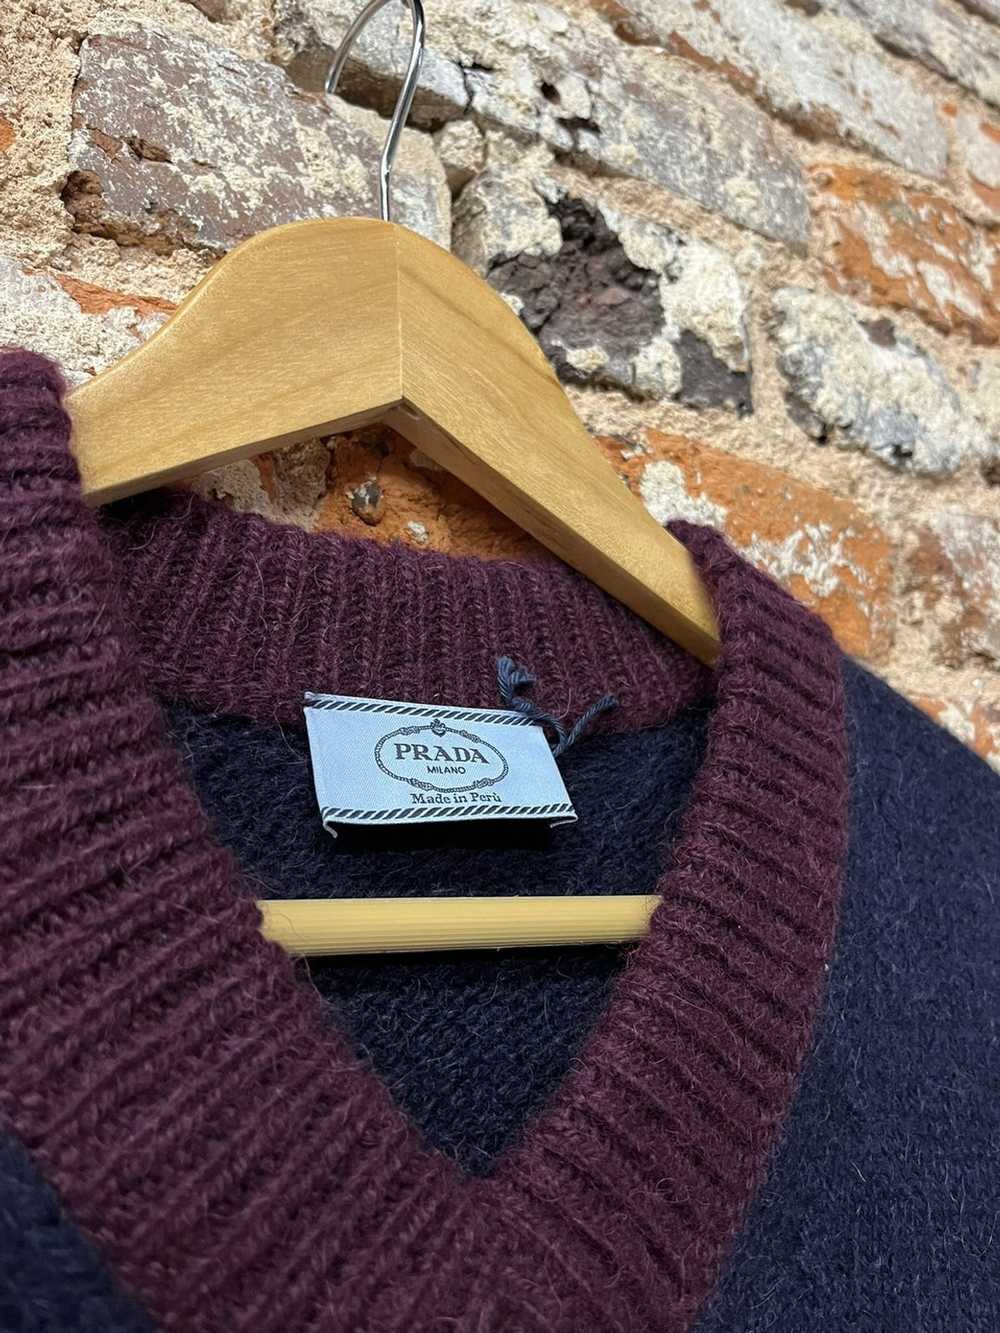 Prada Prada Milano 100% Alpaca V-Neck Sweater - image 4